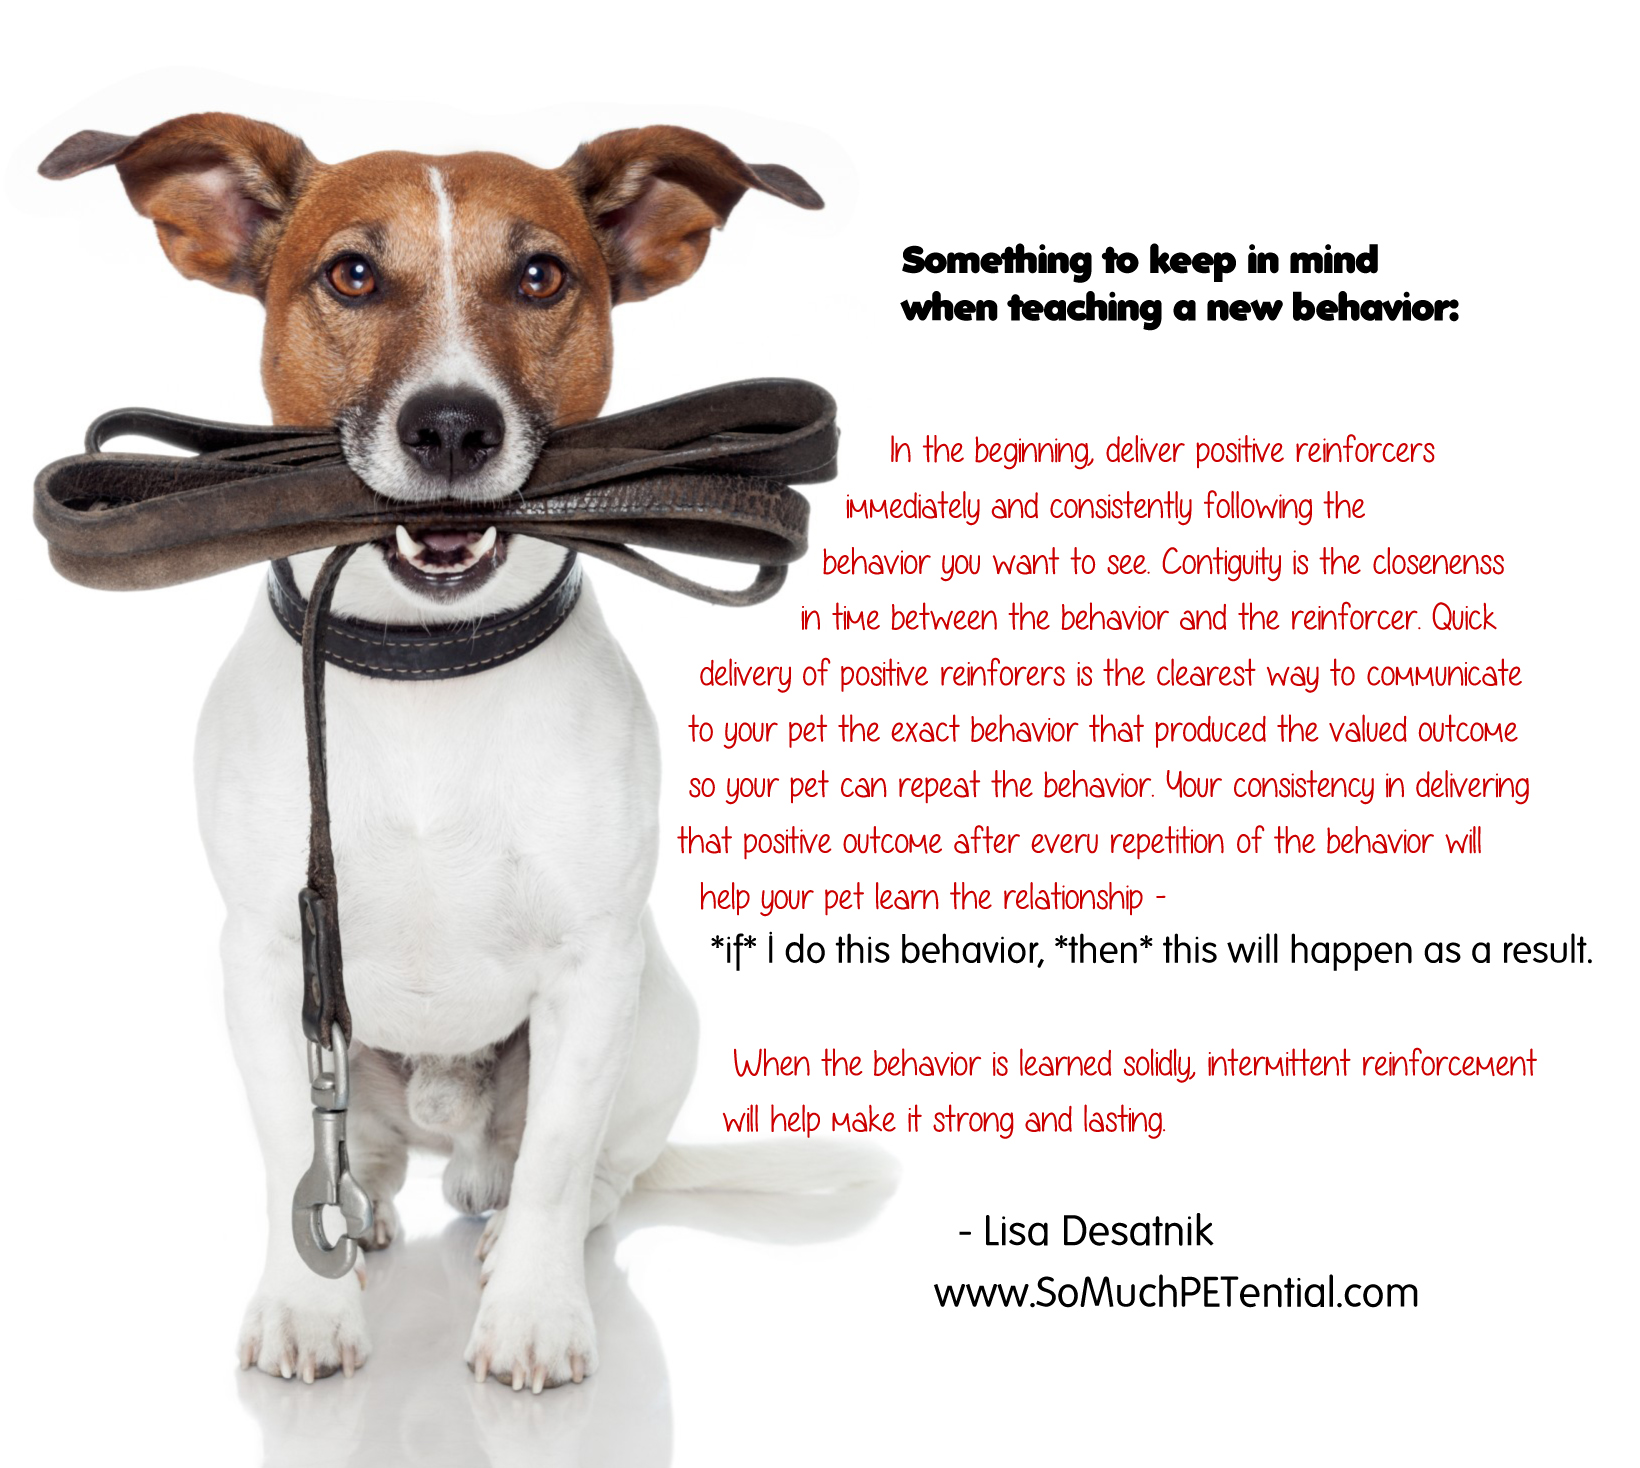 Pet training tip by Lisa Desatnik